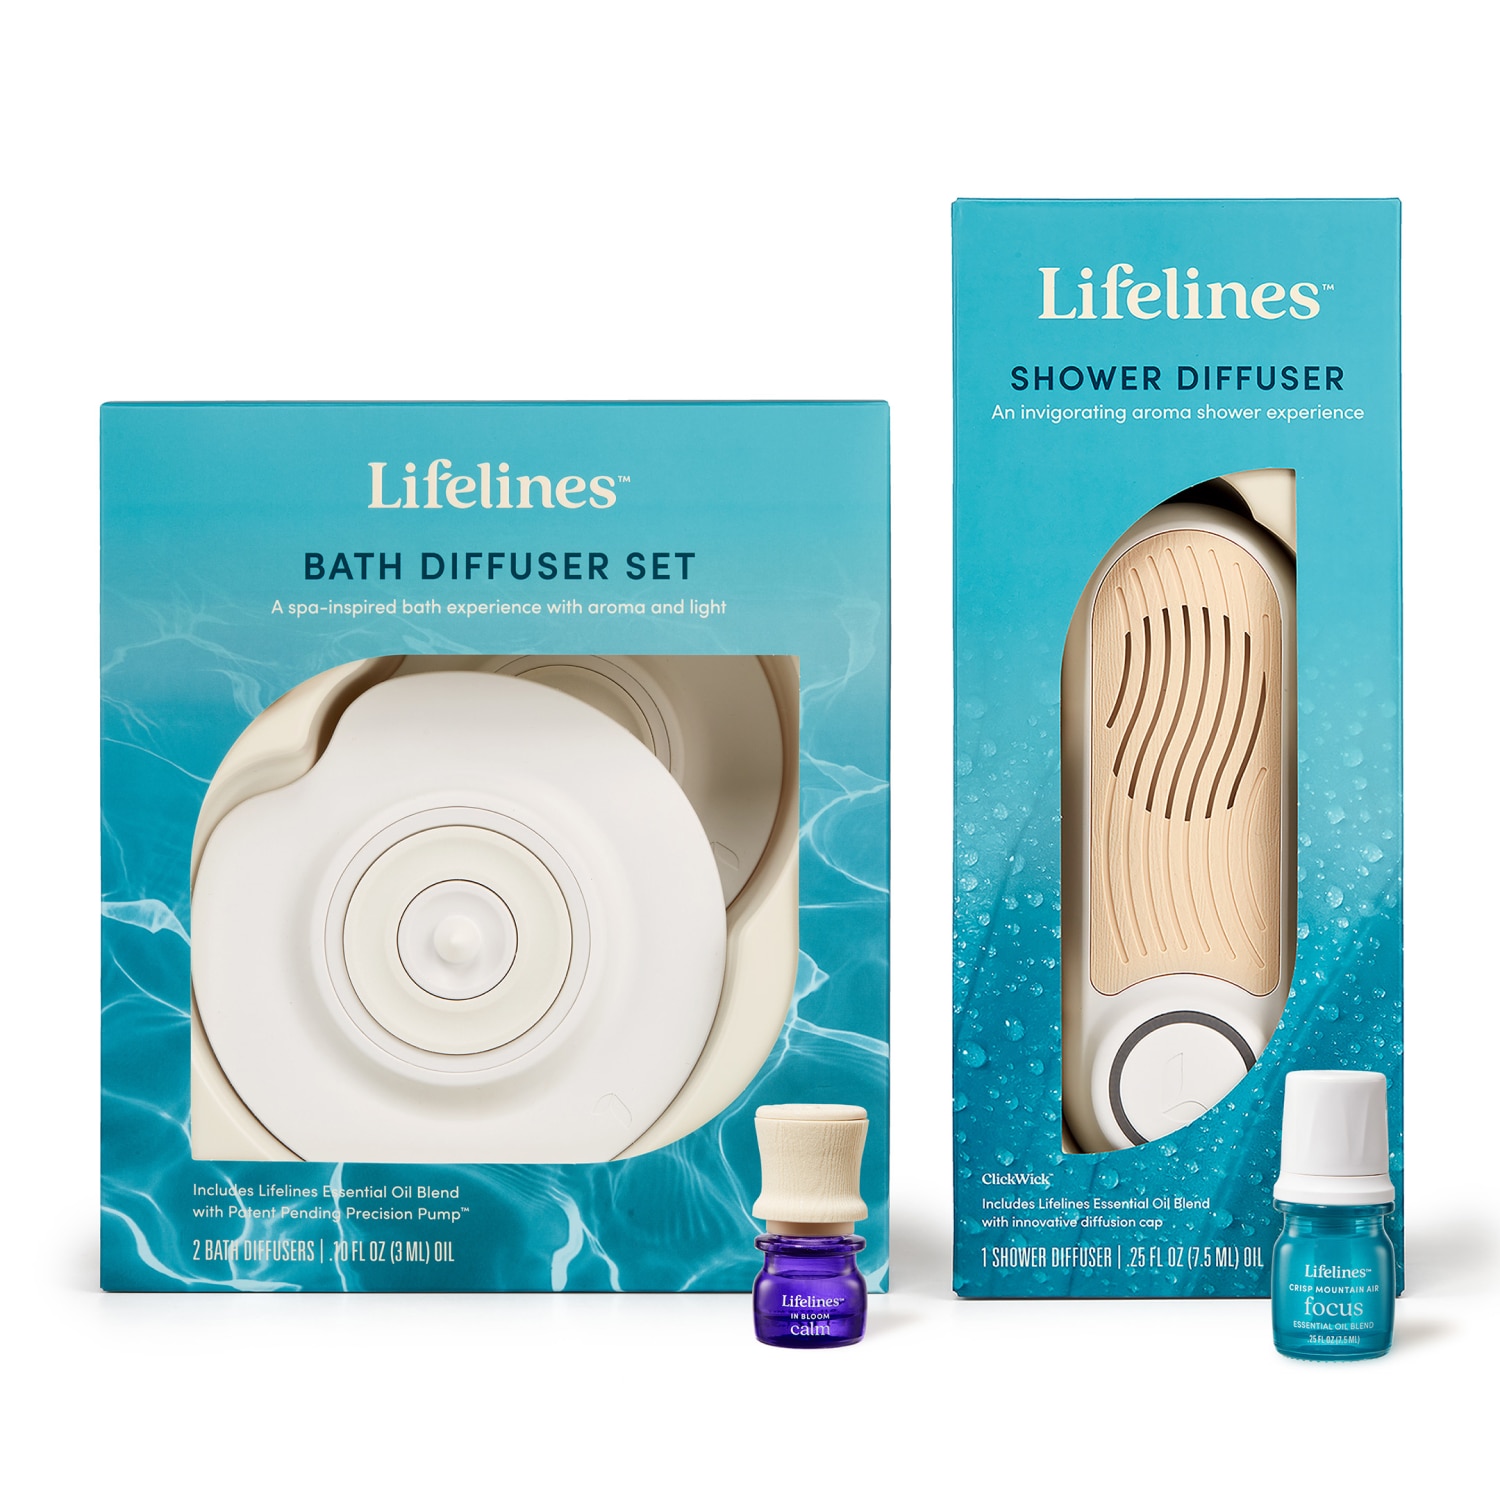 Lifelines "Unwind Your Body and Mind" Bundle - Shower Diffuser and Bath Diffuser Set plus Essential Oil Blends